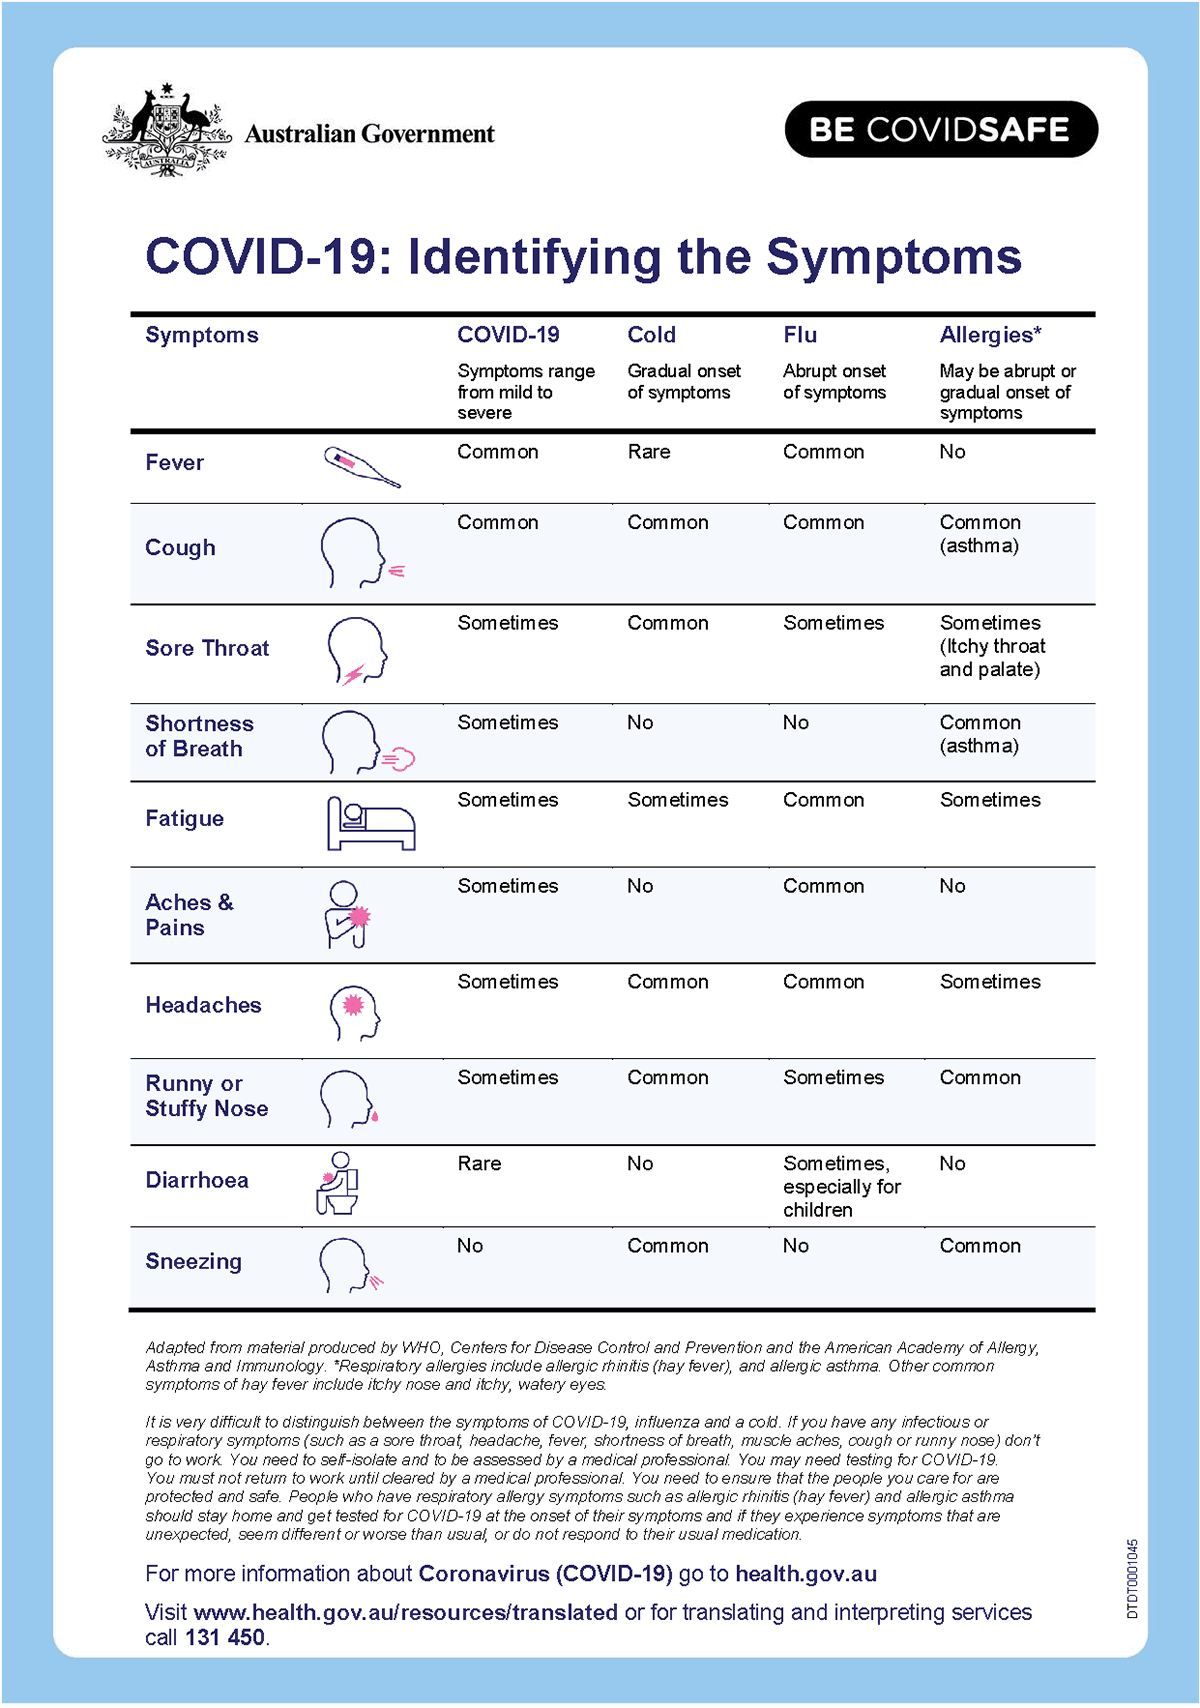 Covid-19 identifying symptoms